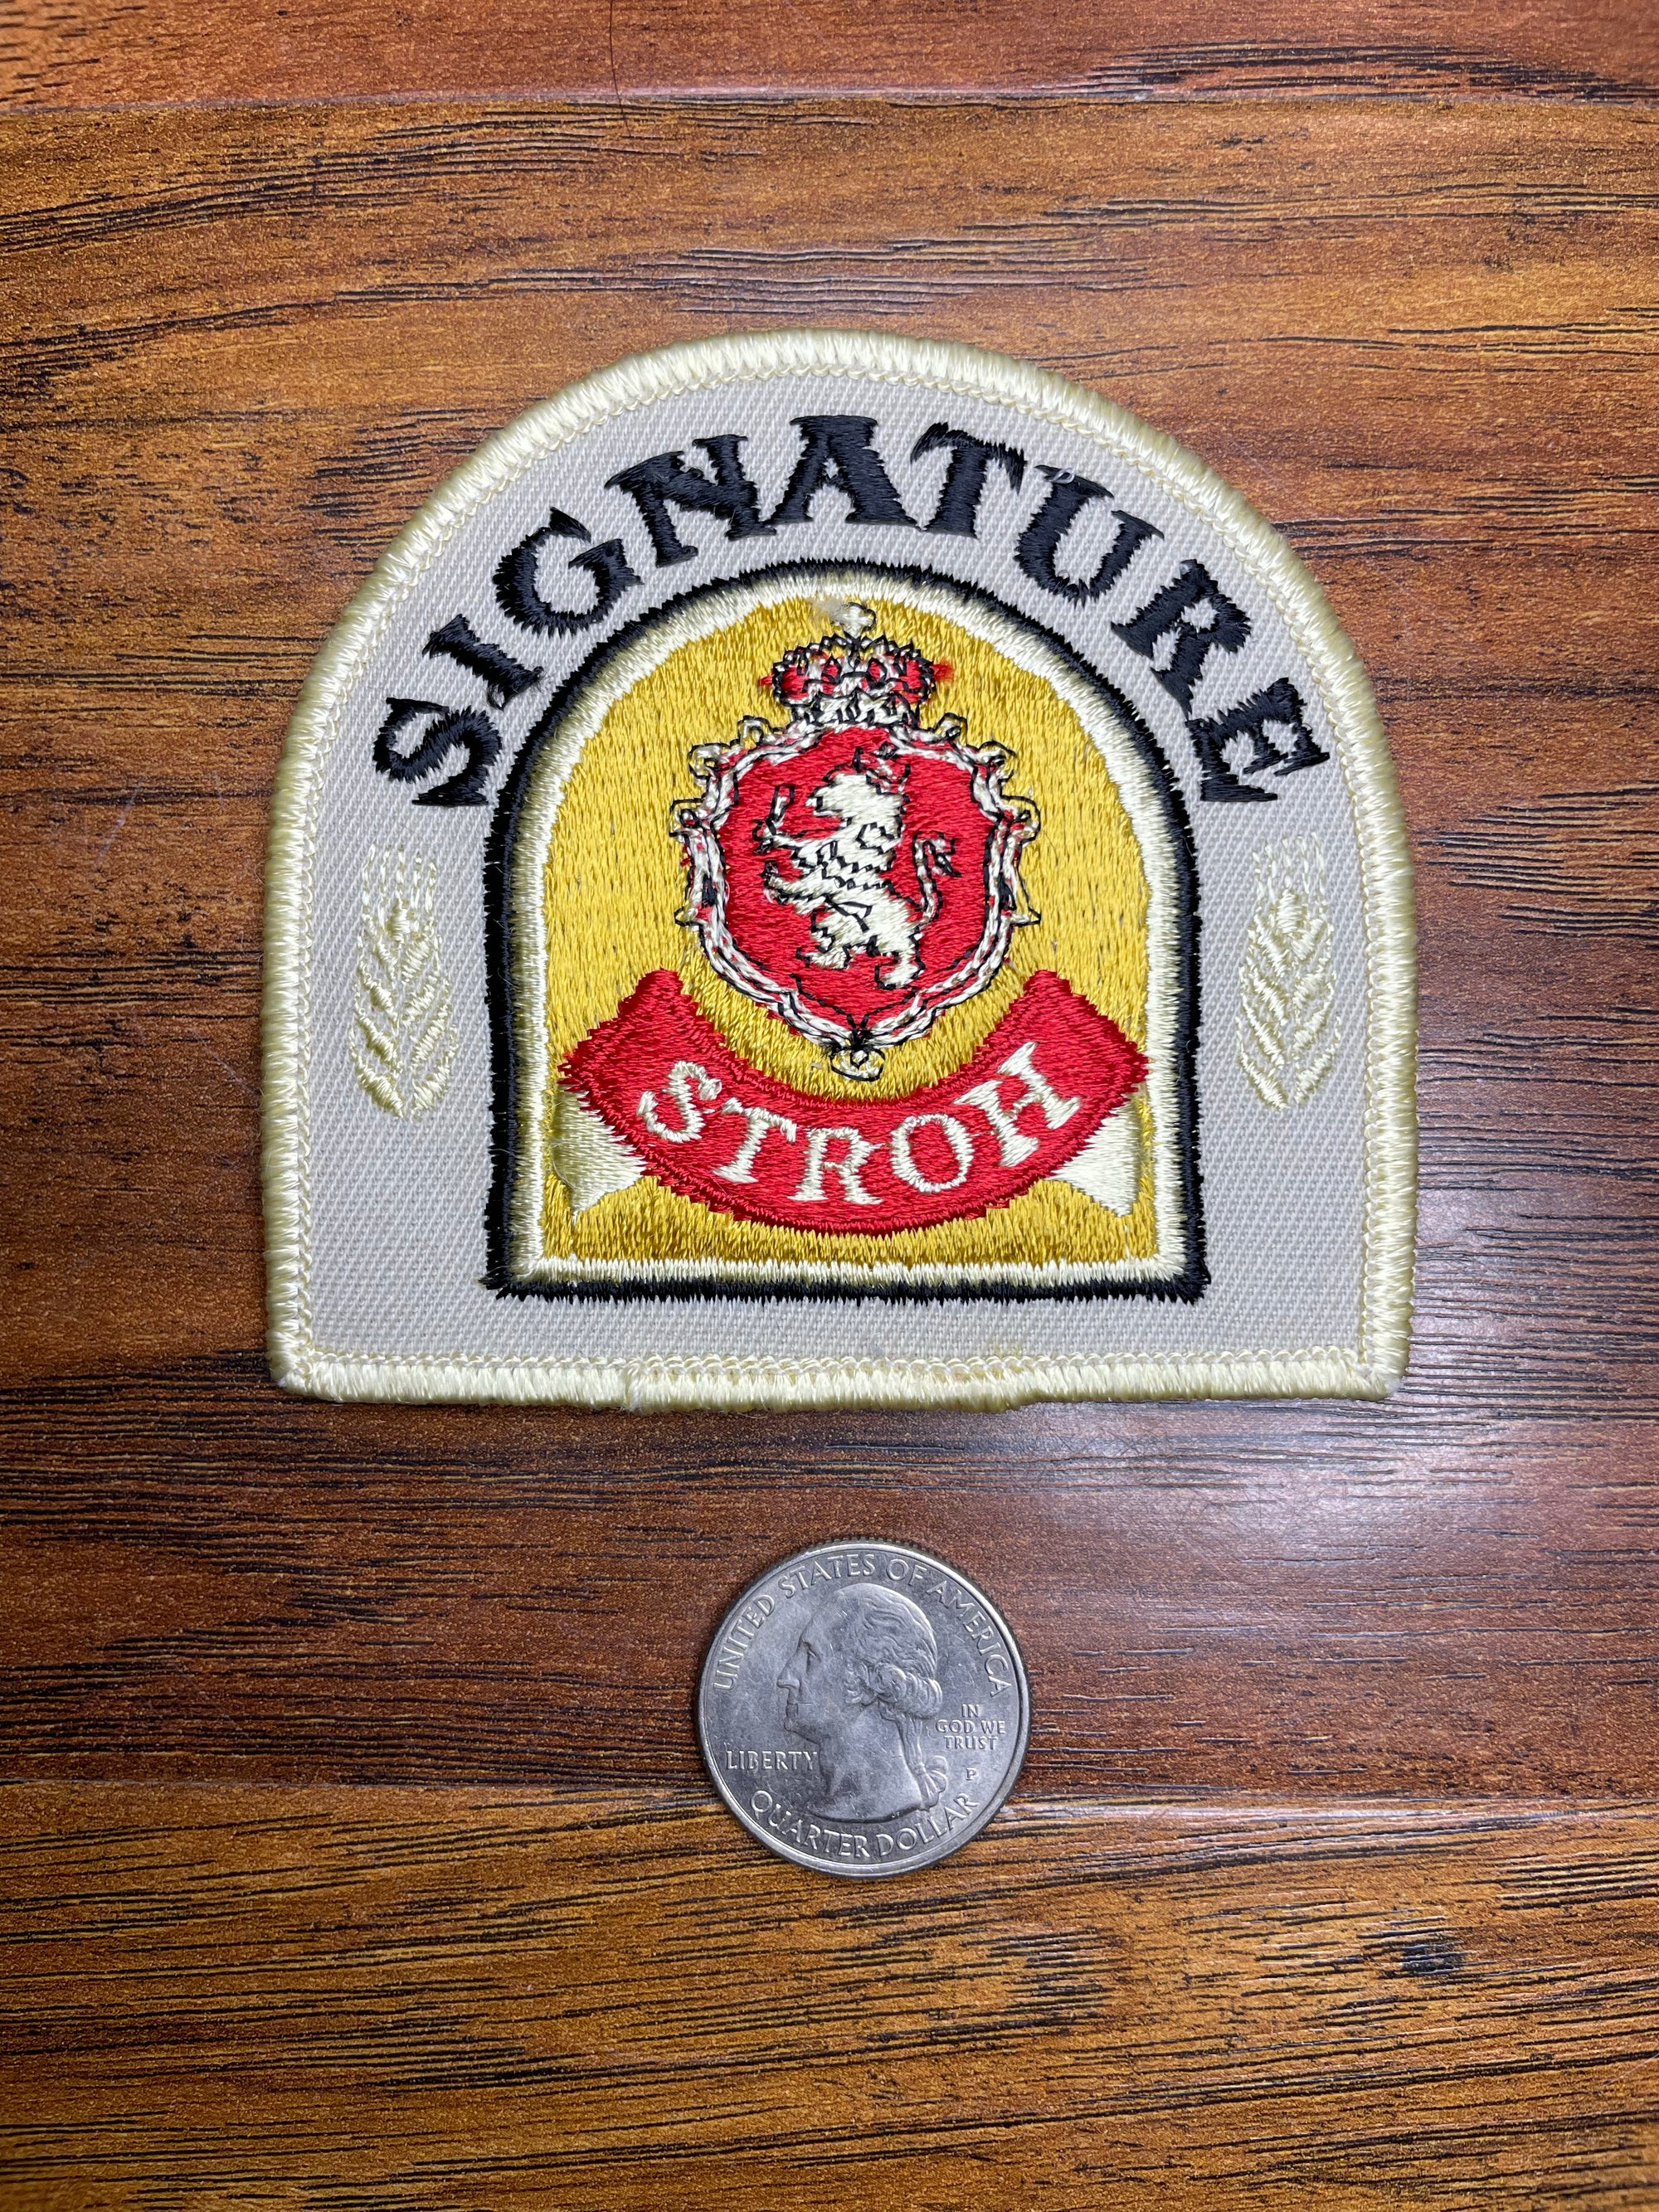 Vintage Signature Stroh